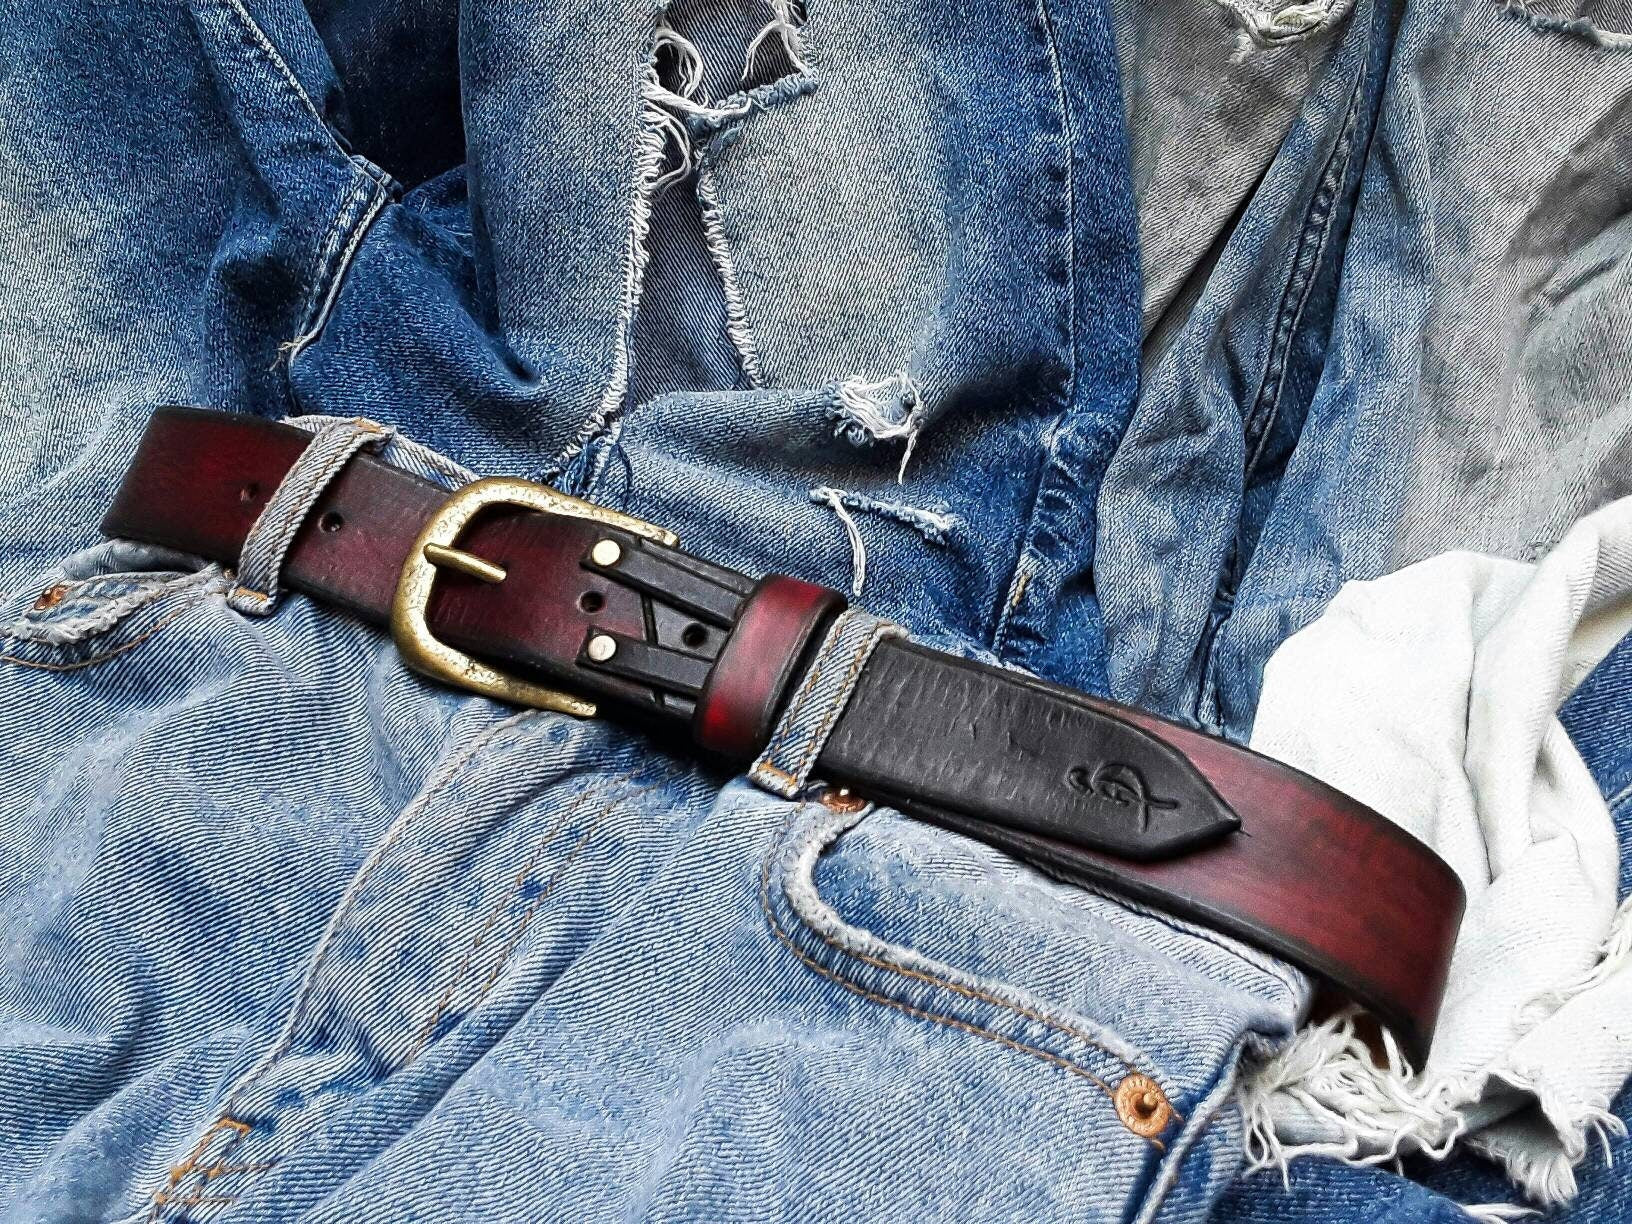 Ikigai leather cord belt - Ikigai Accessories